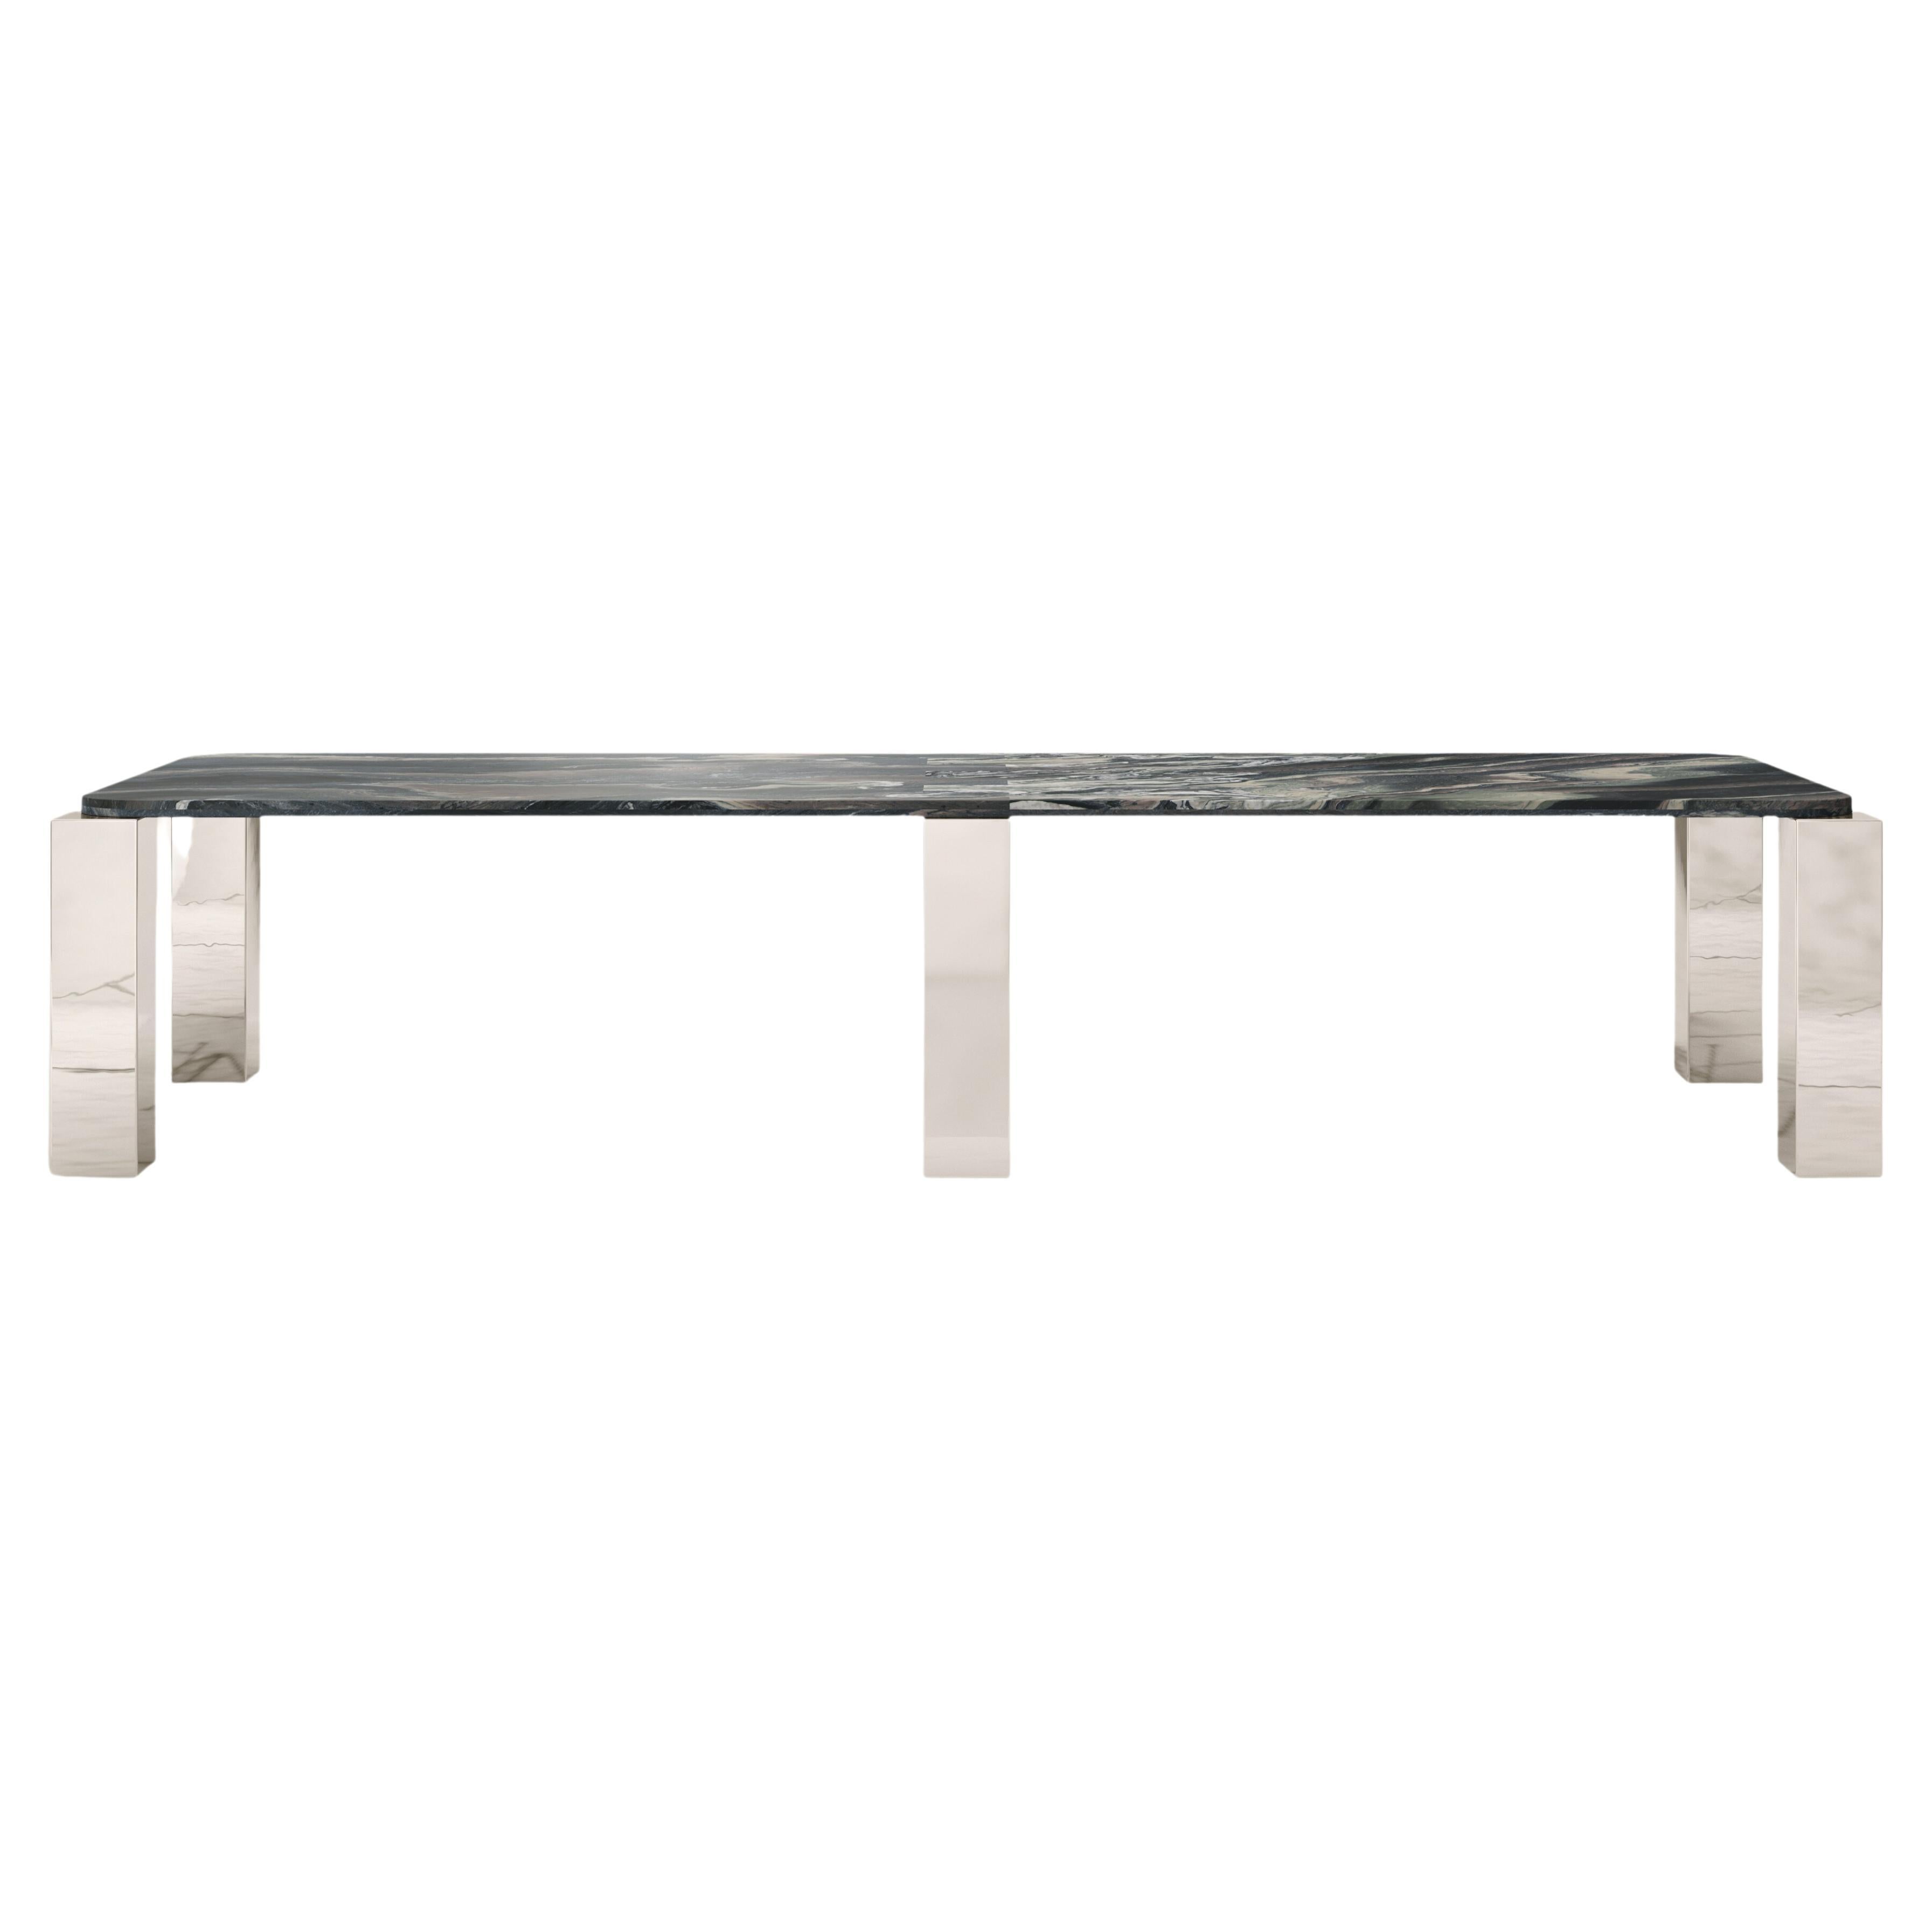 FORM(LA) Cubo Rectangle Dining Table 146”L x 50”W x 30”H Ondulato Marble/Chrome